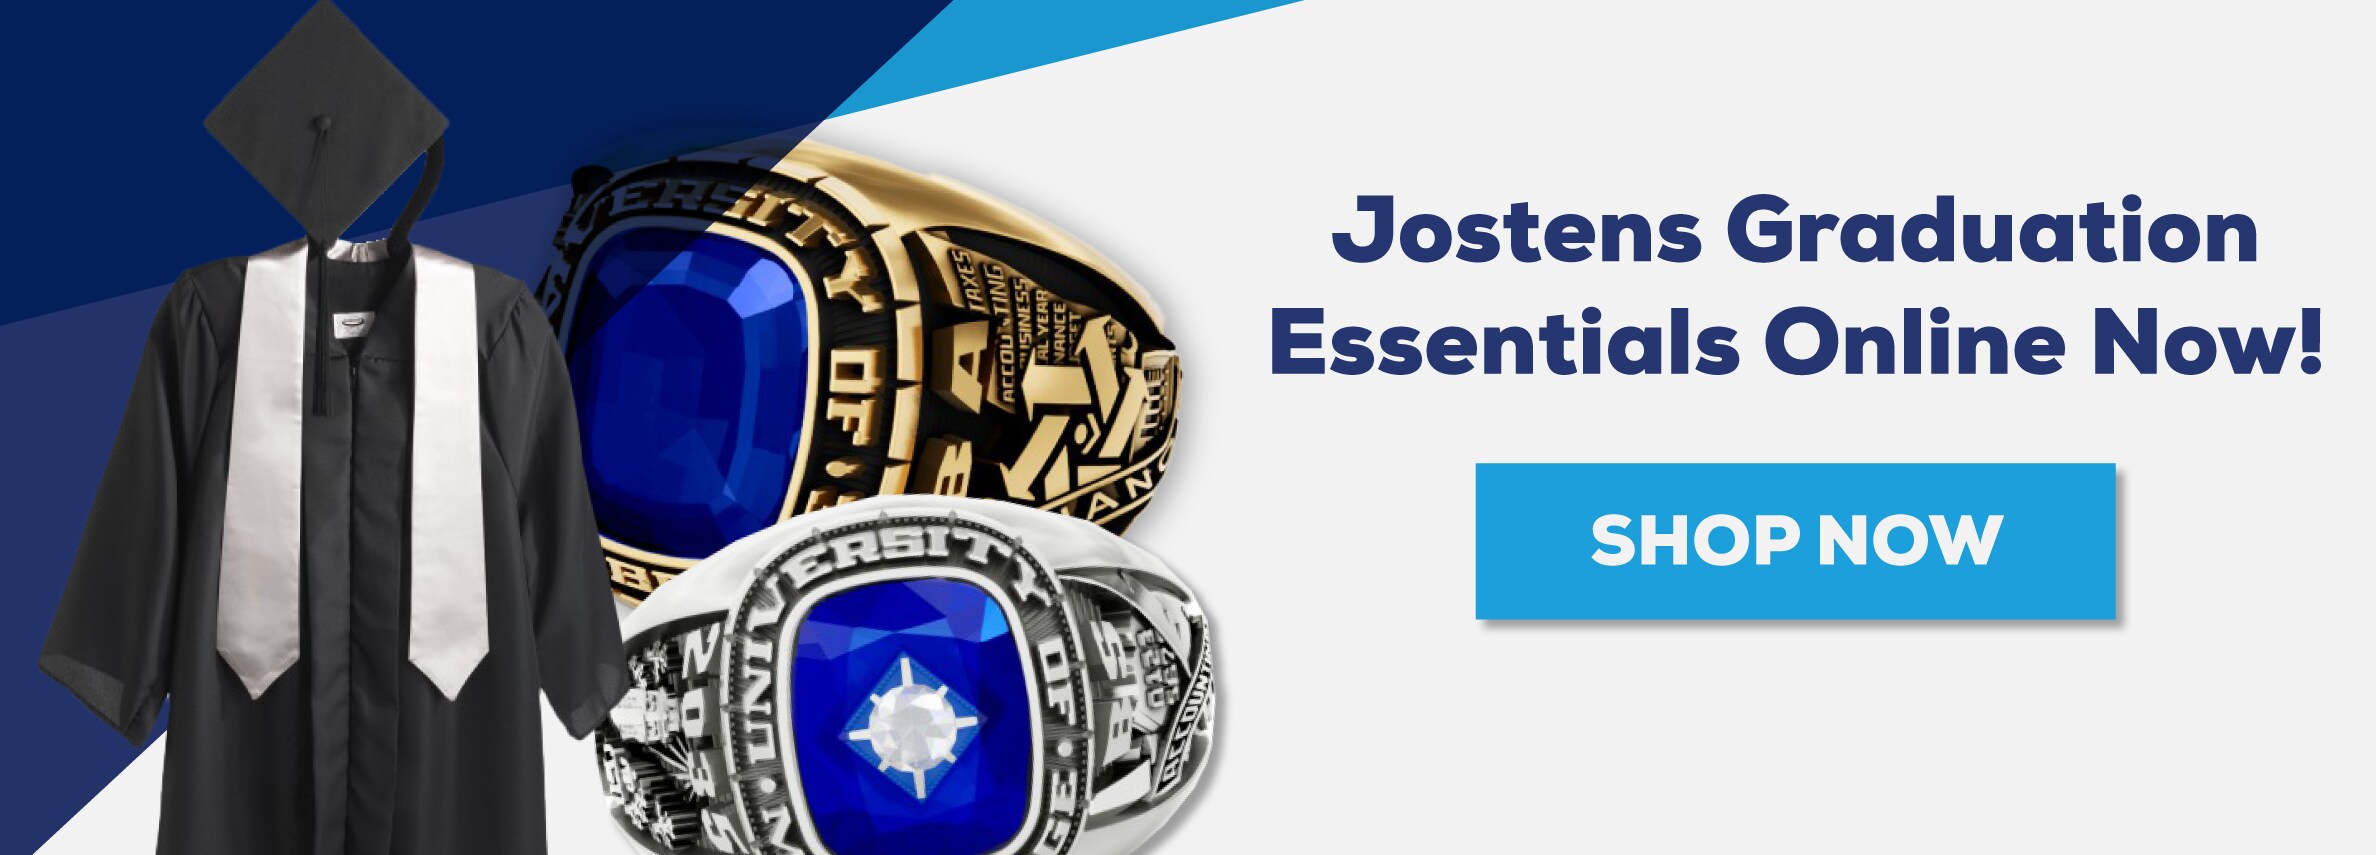 Jostens Graduation Essentials Online Now! shop now (new tab)